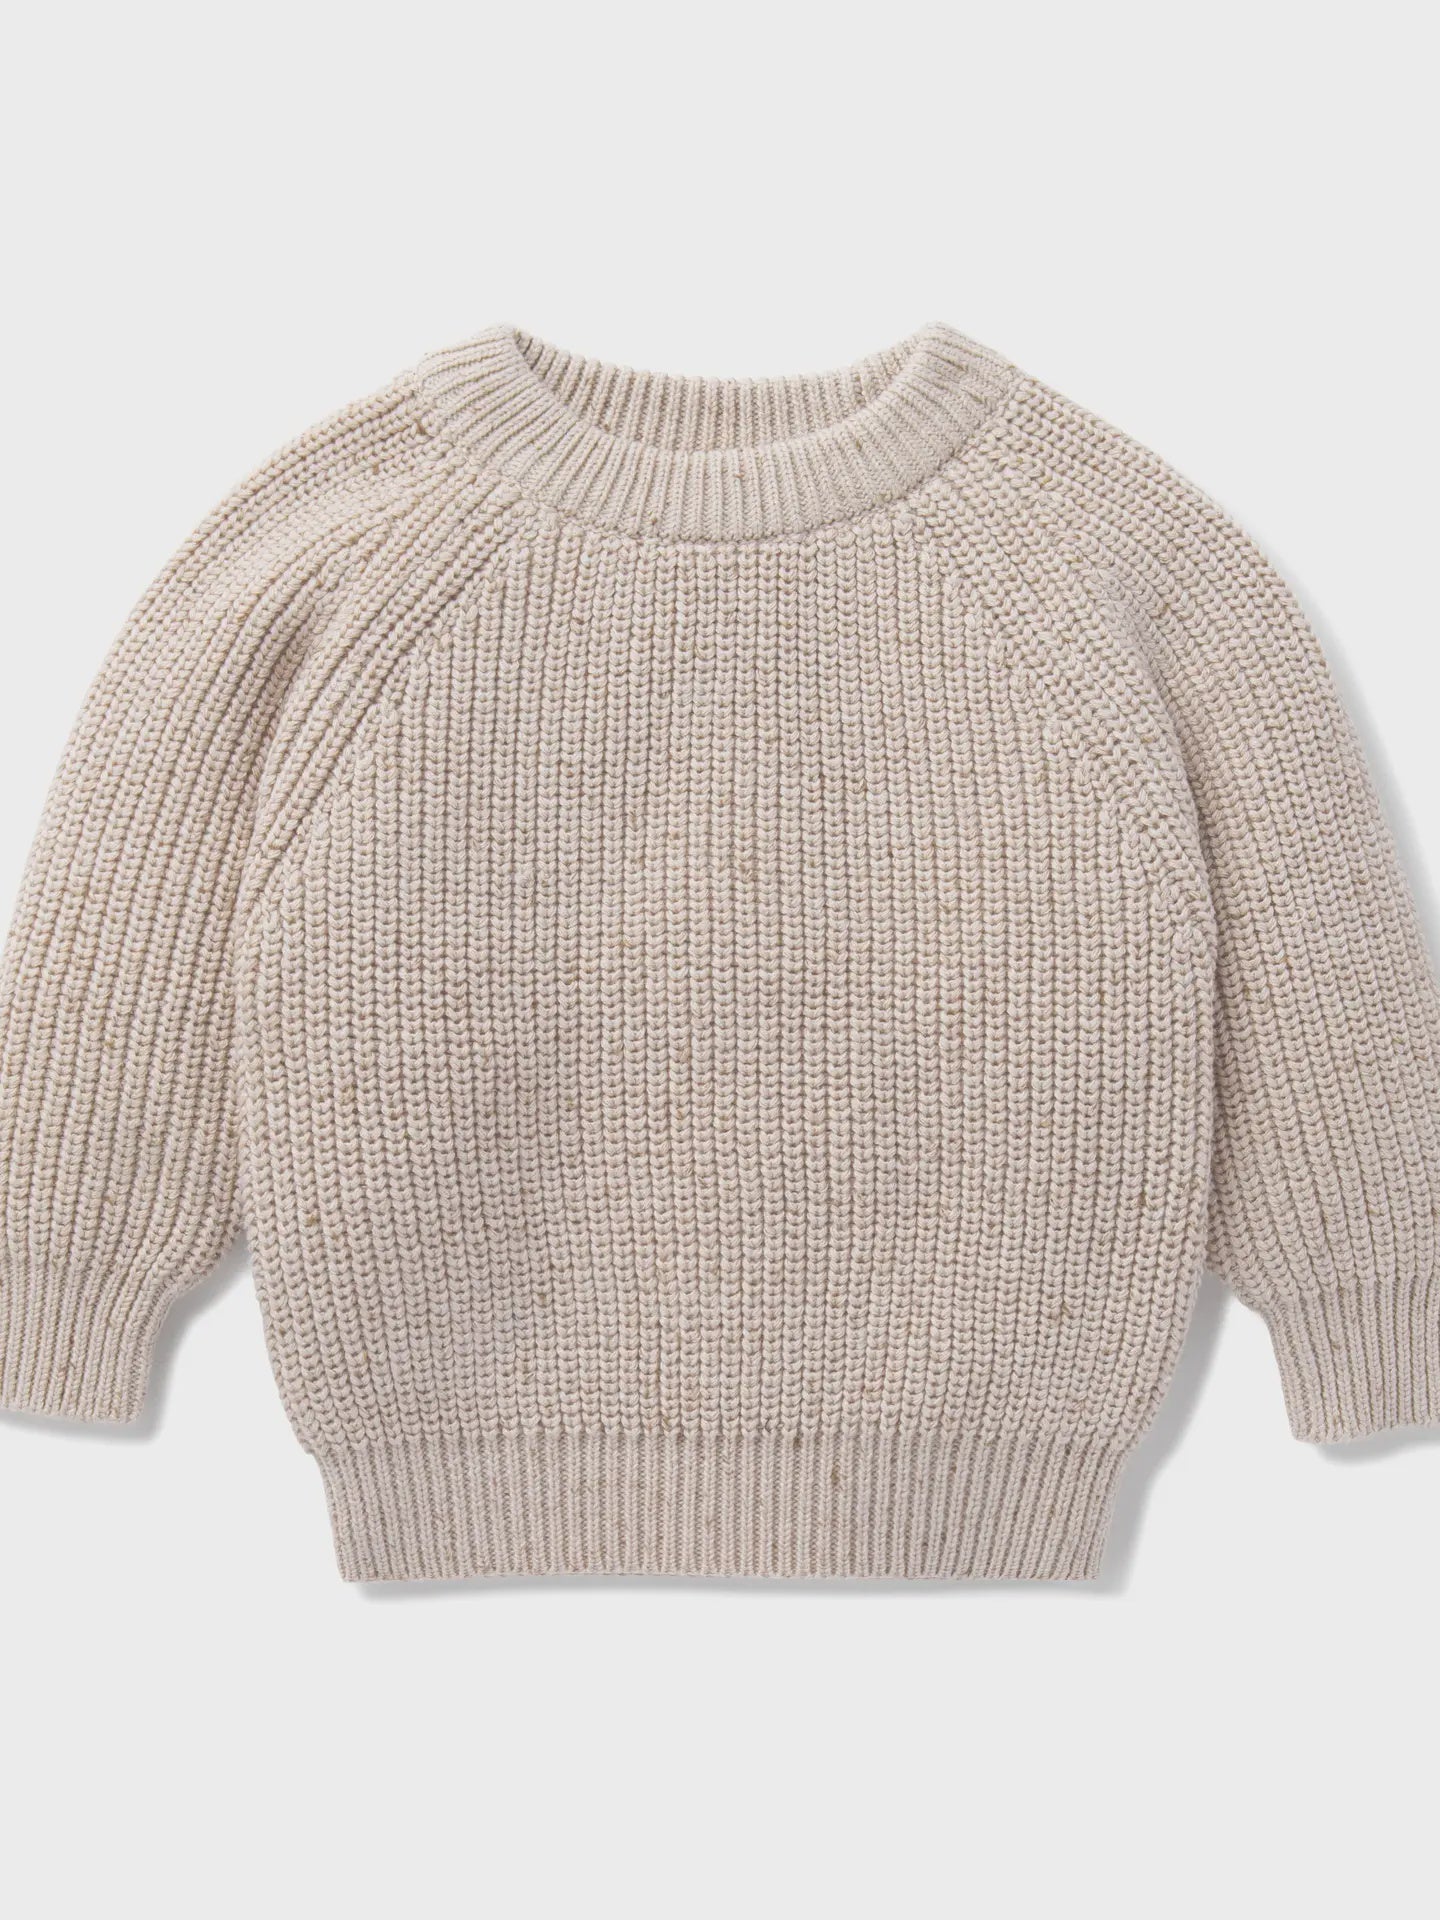 Aster & Oak Natural Oat Fleck Knit Sweater, 1yr